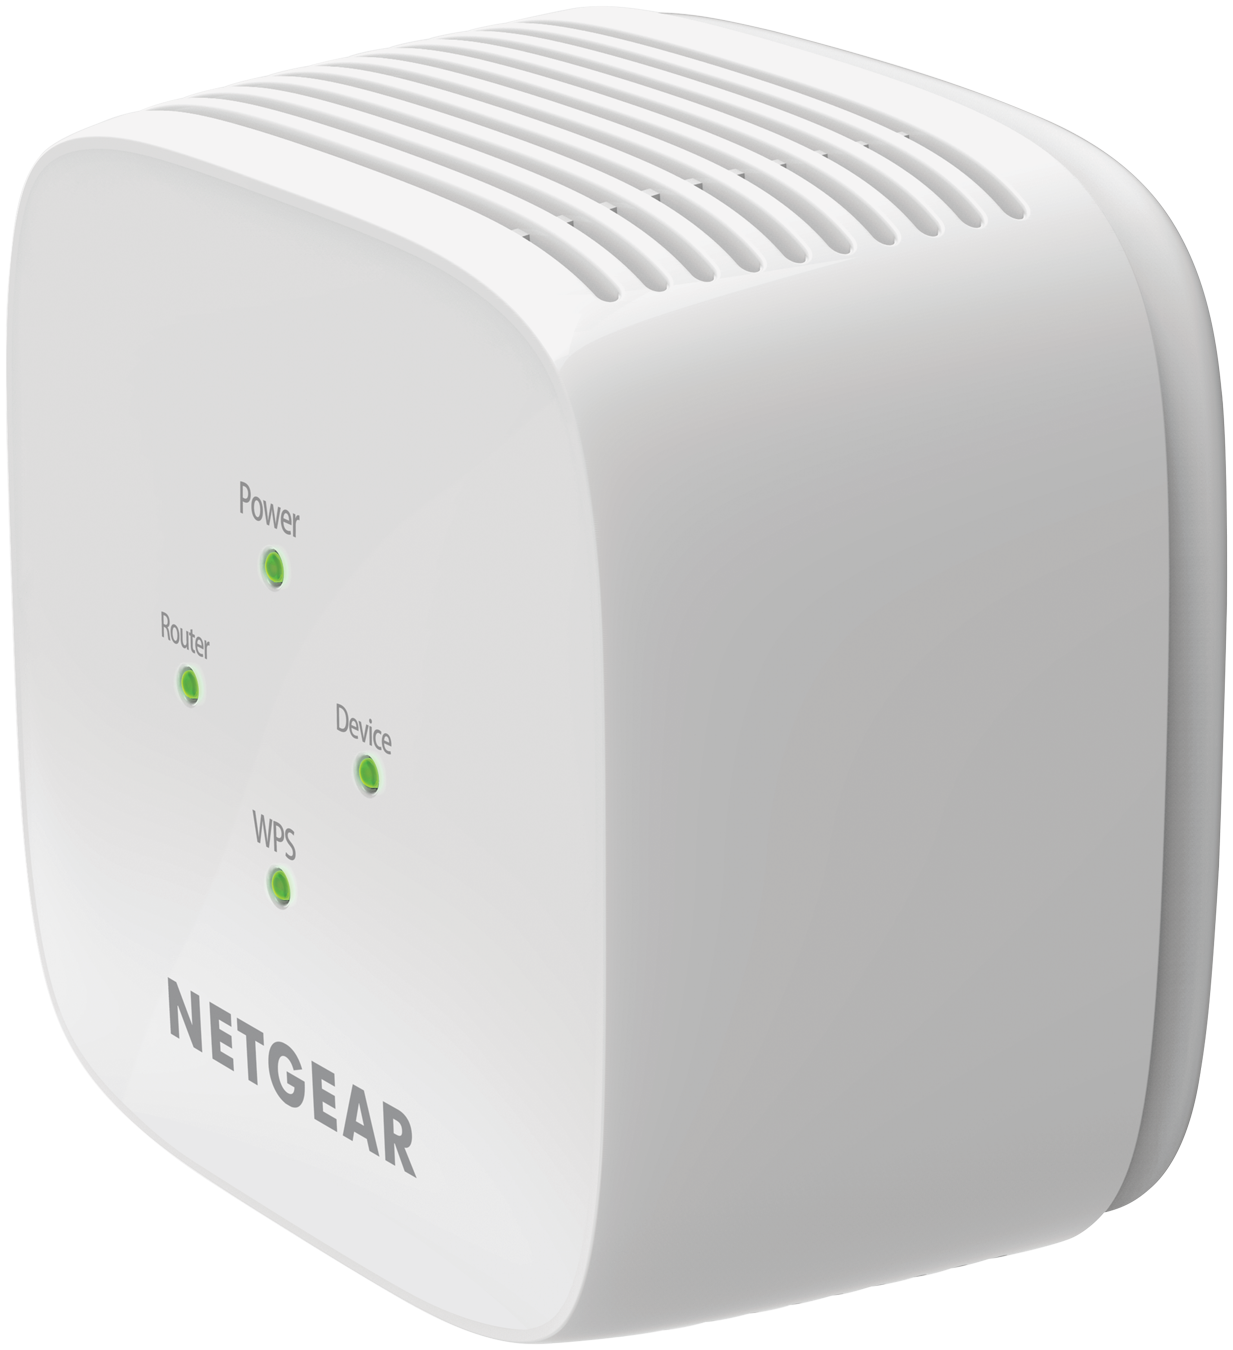 Netgear AC1200 EX6110 WiFi Range Extender